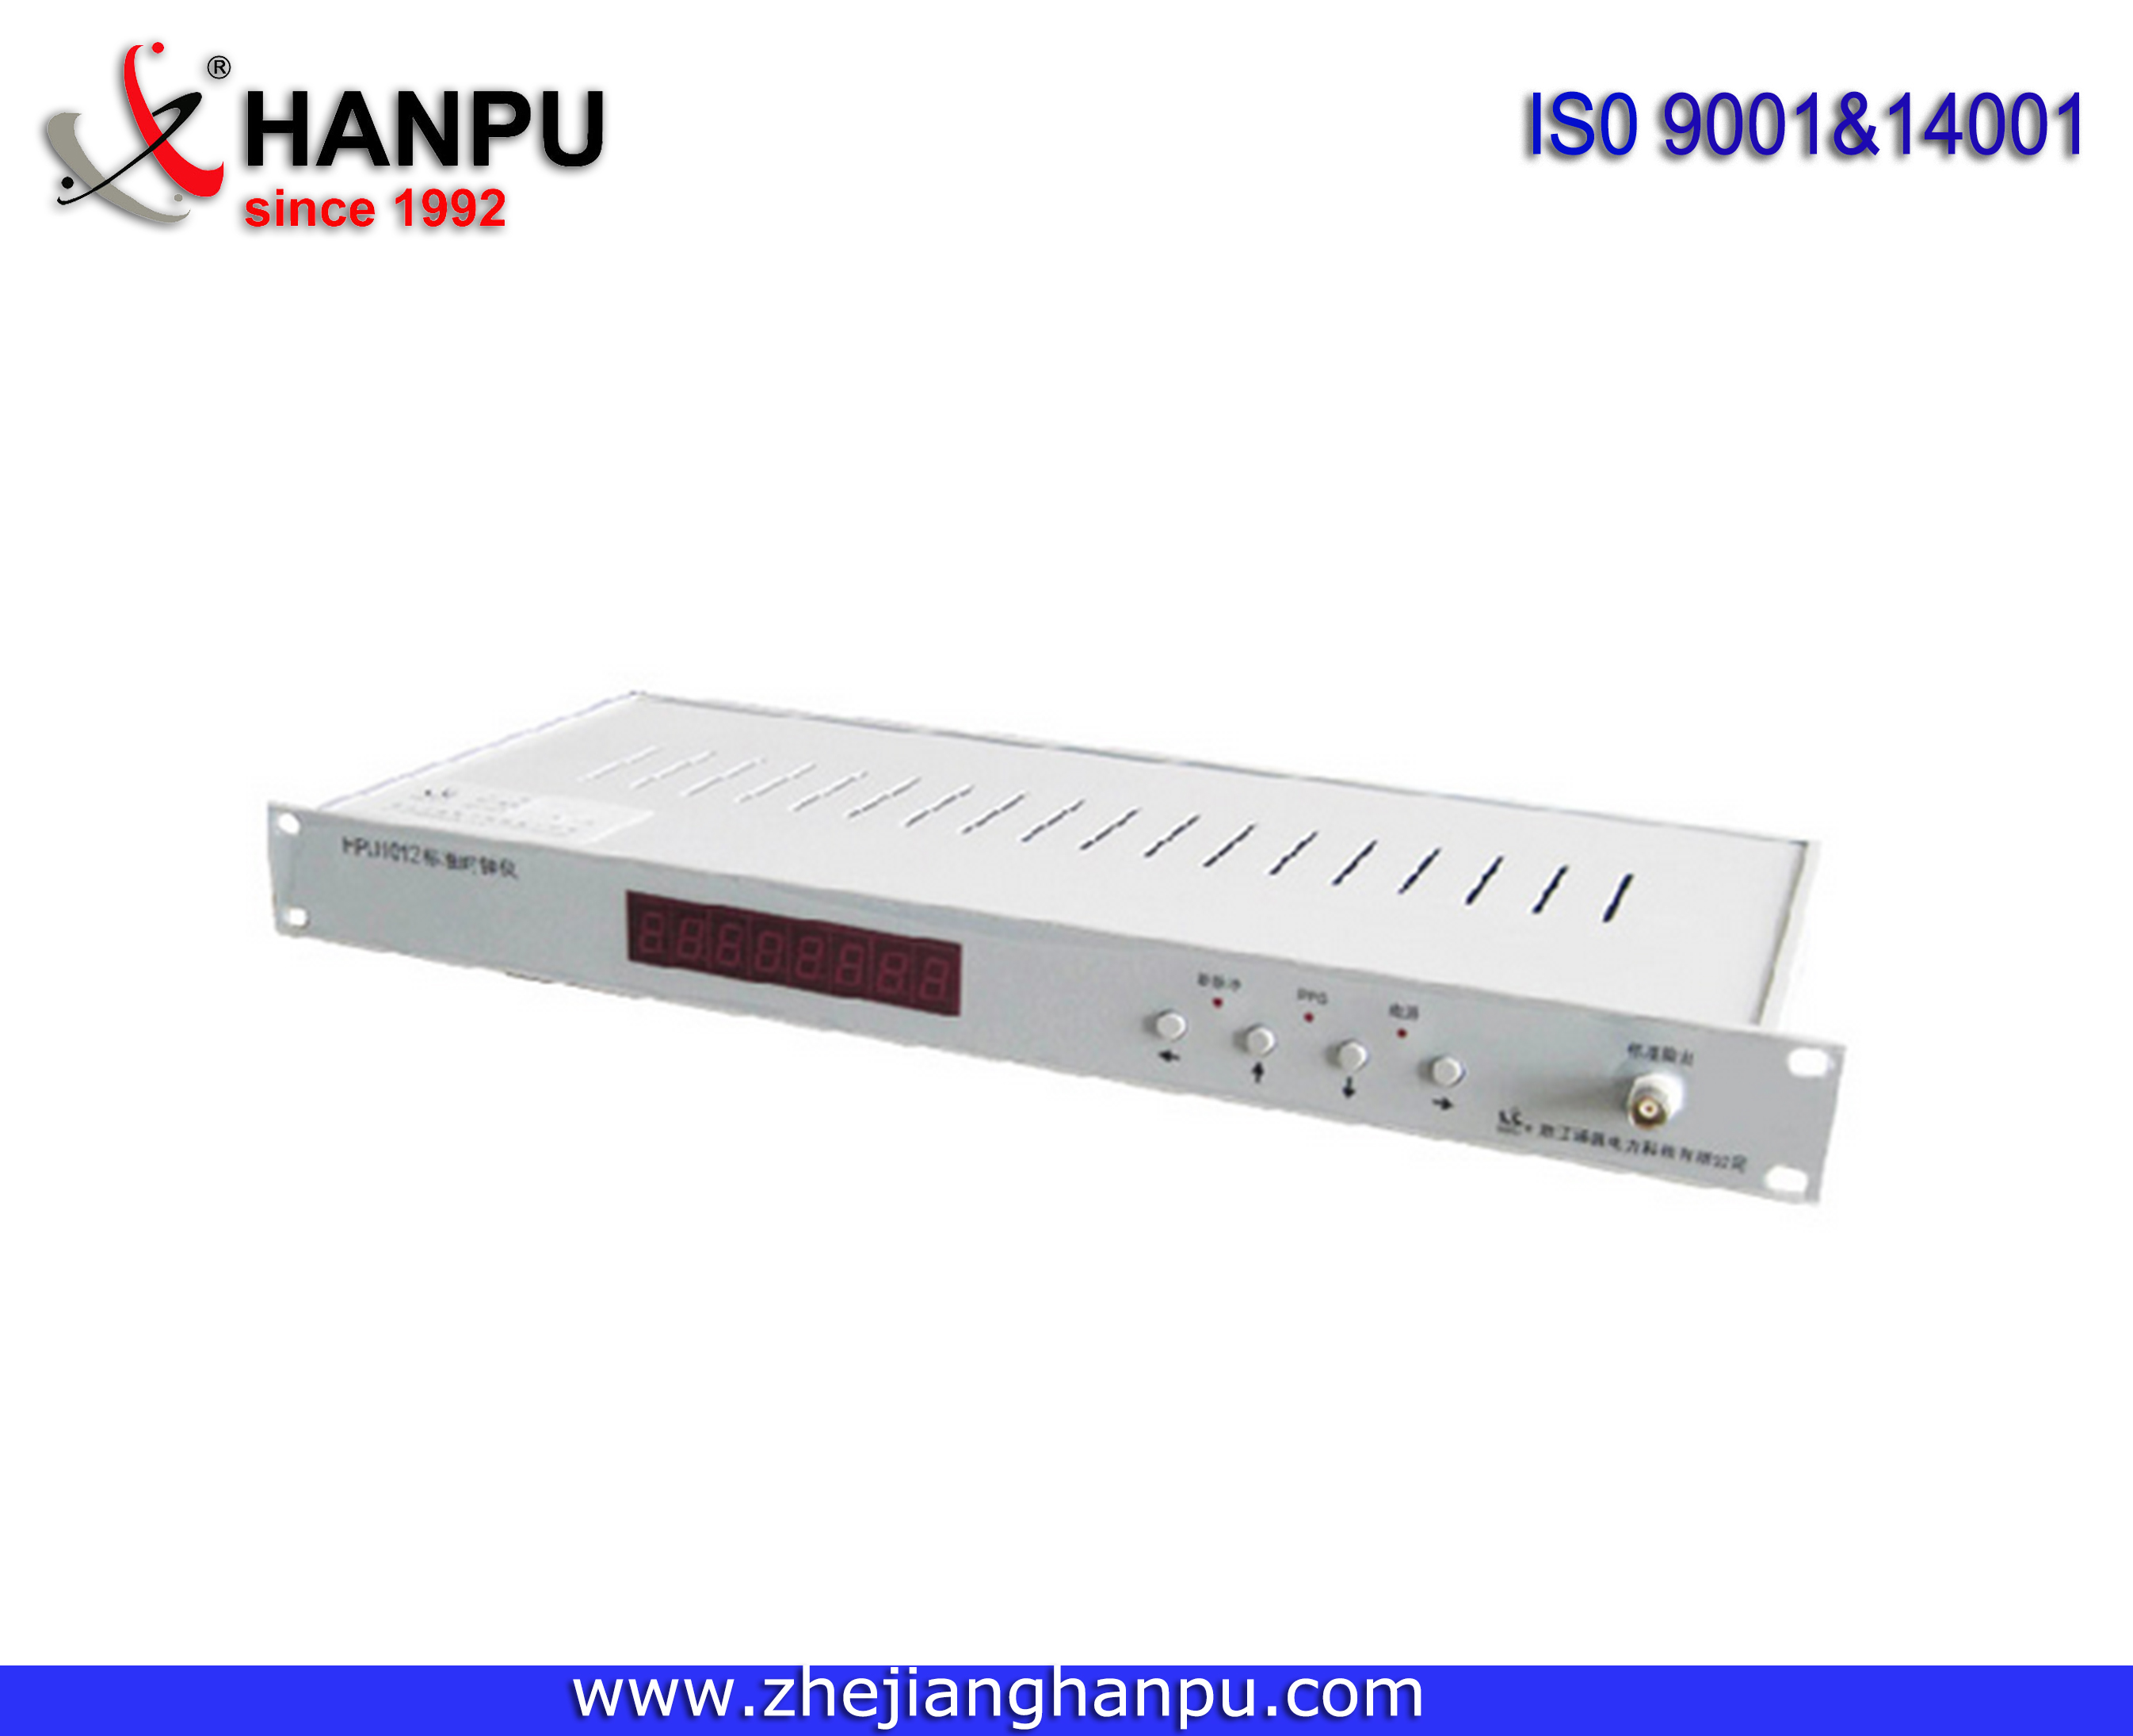 HPU-1012B Standard Clock Device